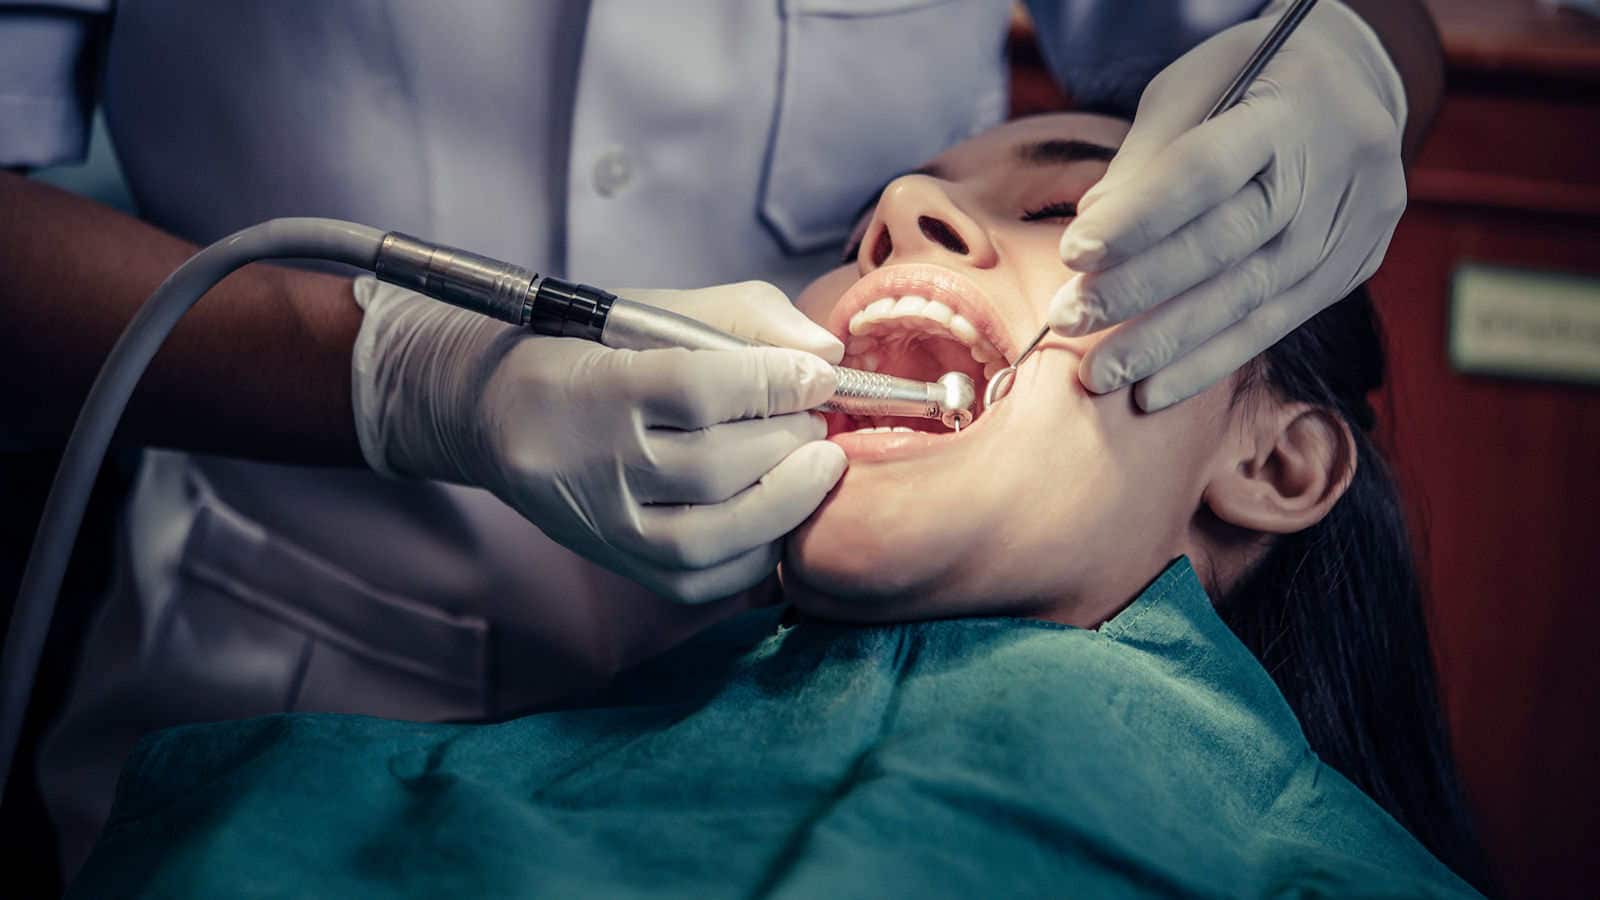 Upland Dental Implant and Orthodontics of Rancho Cucamonga